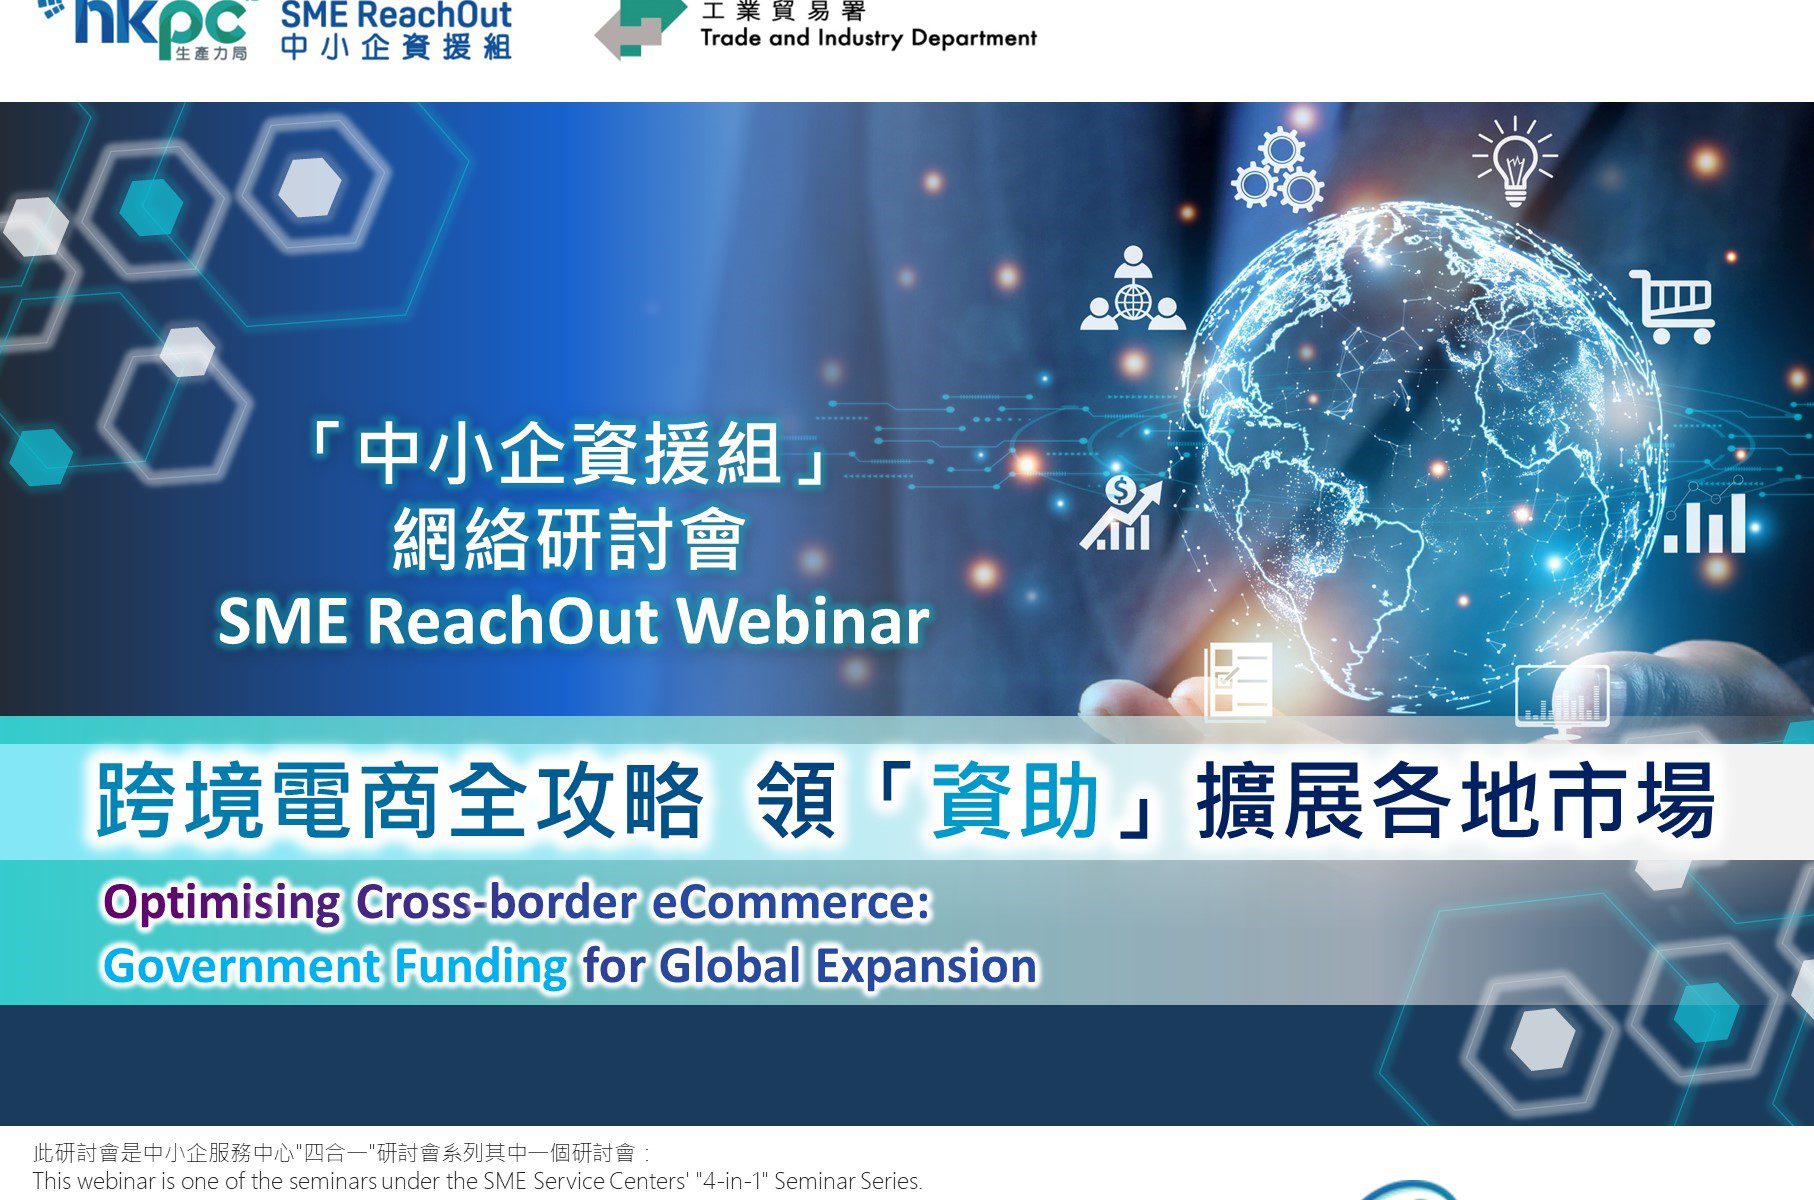 【SME ReachOut Webinar】Optimising Cross-border eCommerce: Government Funding for Global Expansion